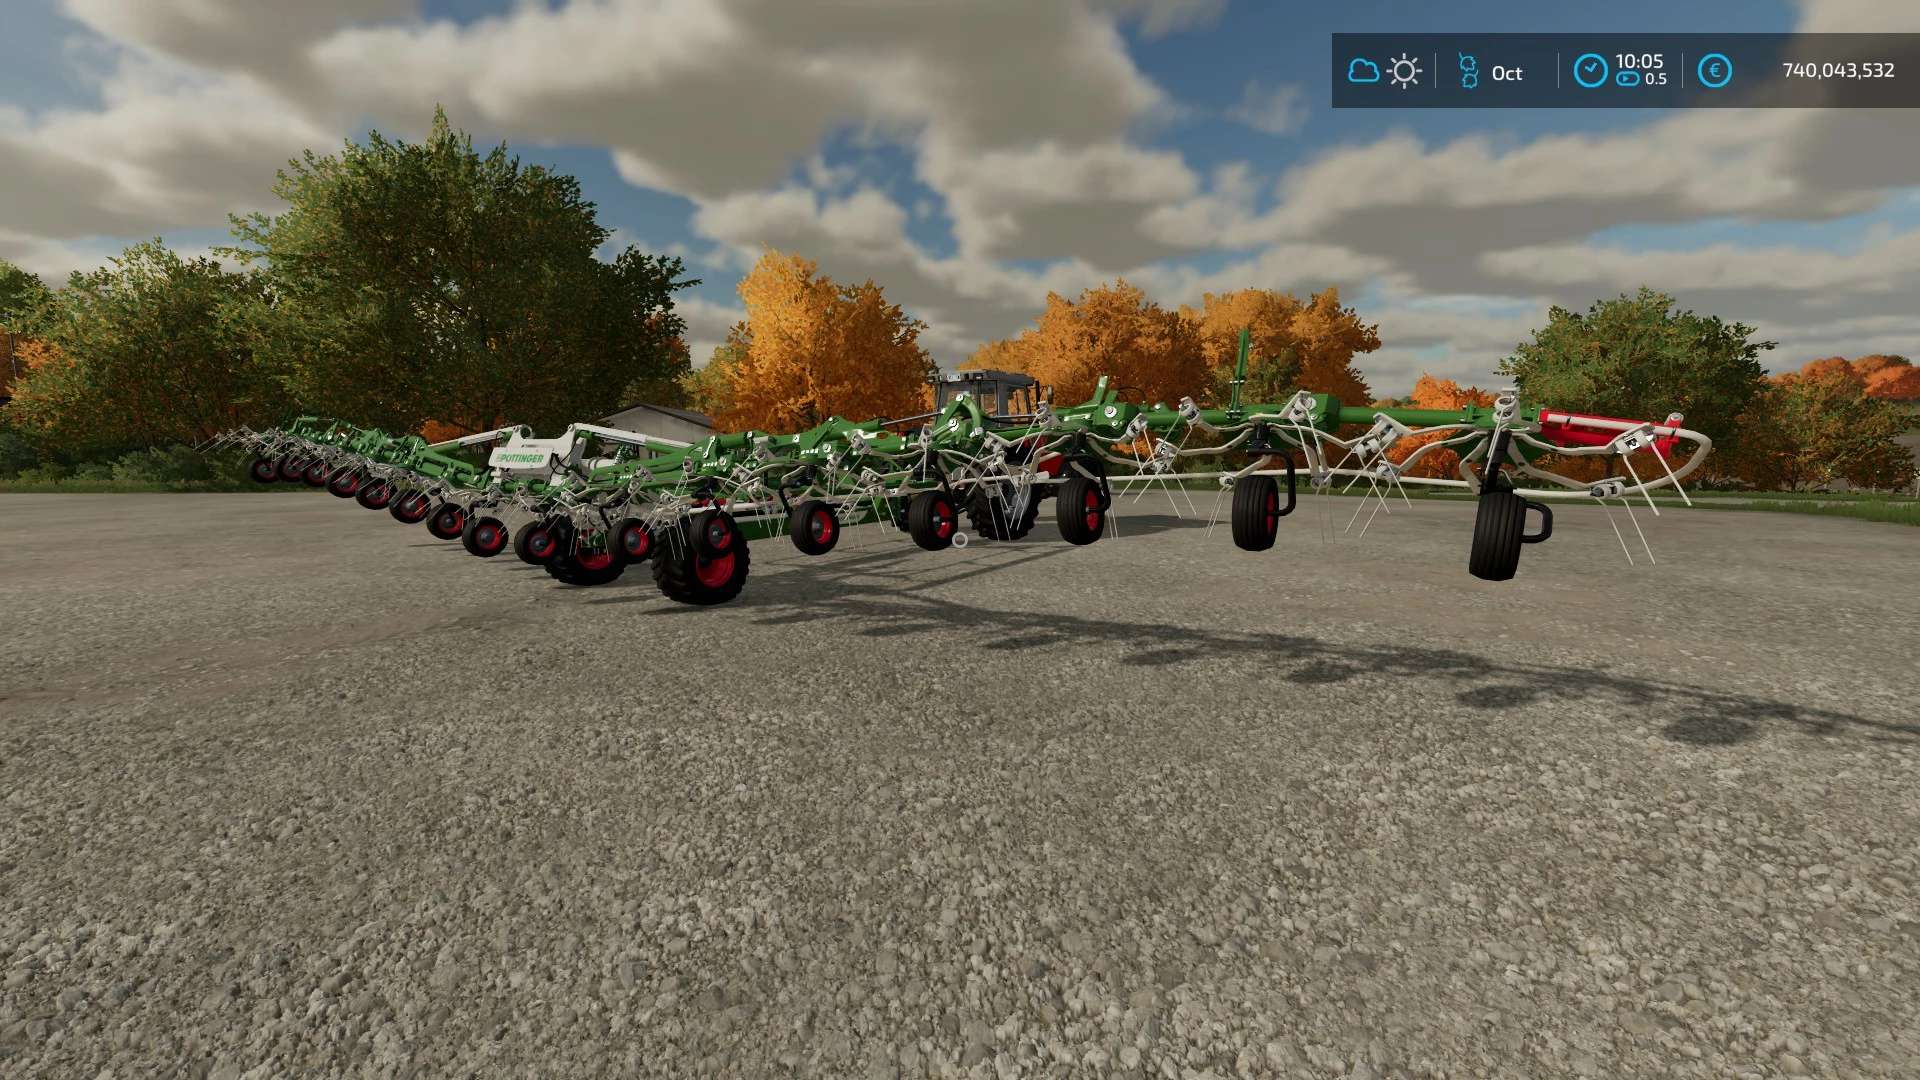 Игра farming simulator 22 моды. Фарминг 22 моды. Техника ФС 22. FS 22 ферма. Fs22 Mods.